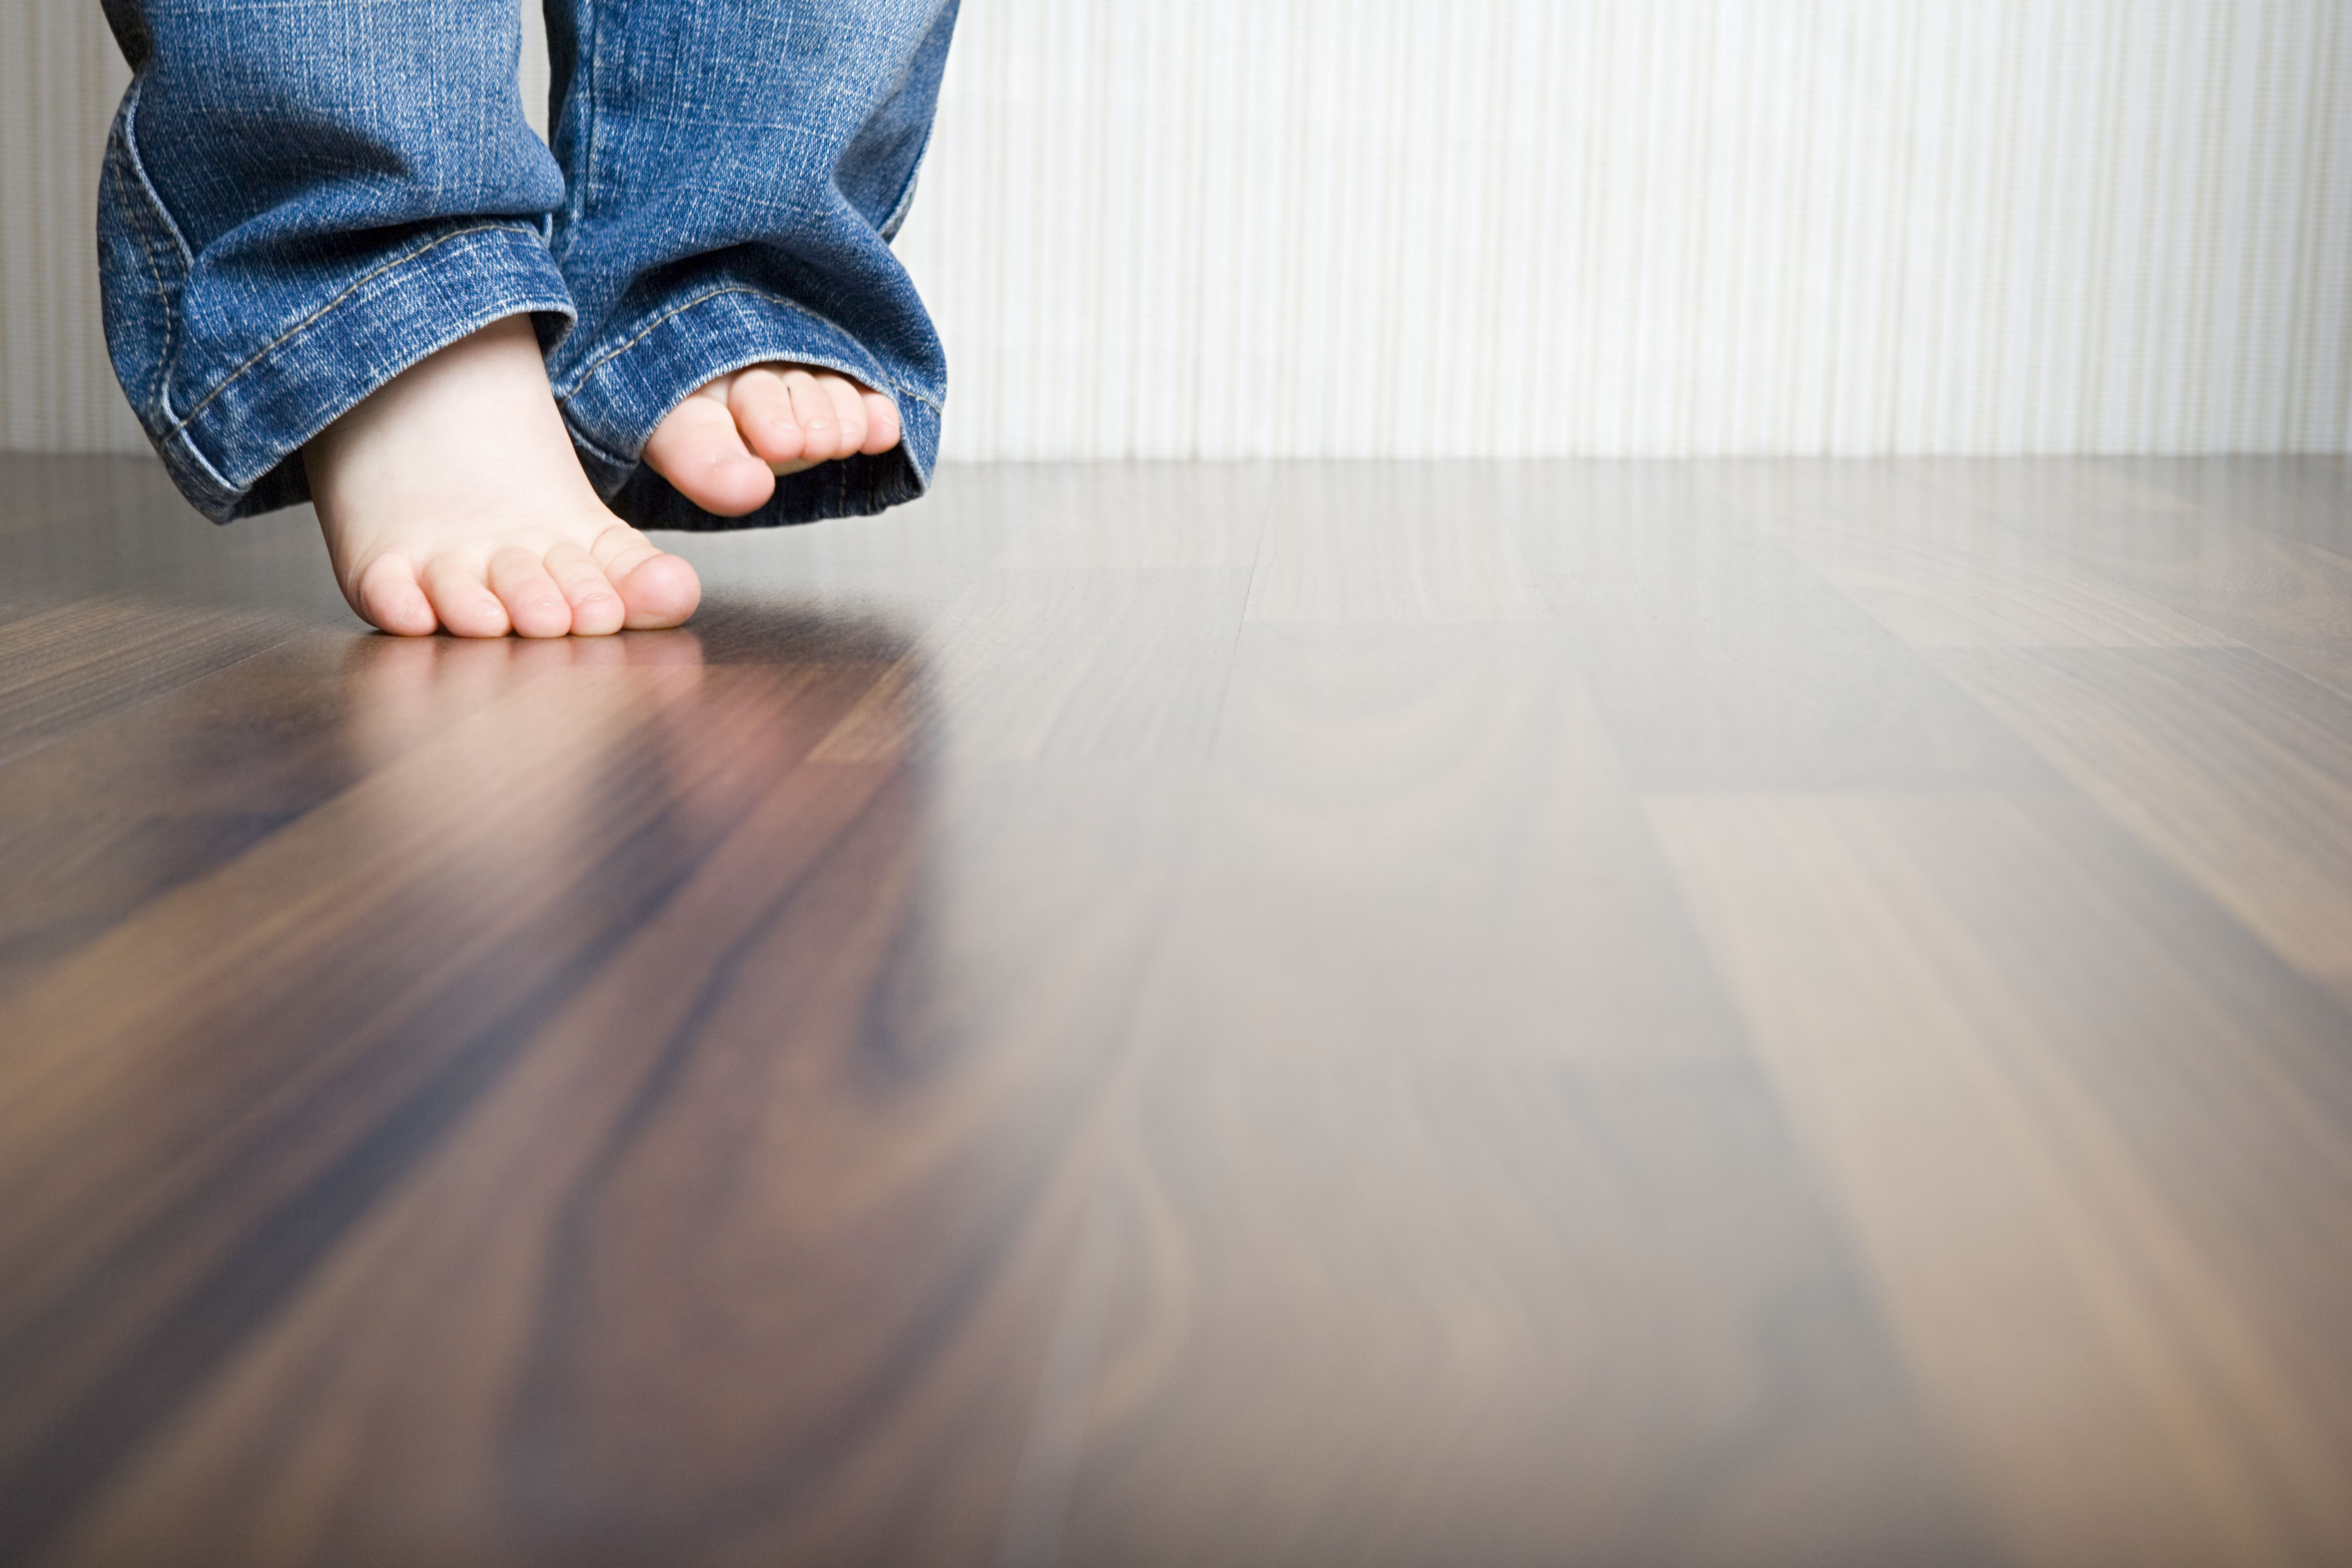 best hardwood floor cleaner machine reviews of how to clean hardwood floors best way to clean wood flooring in 1512149908 gettyimages 75403973